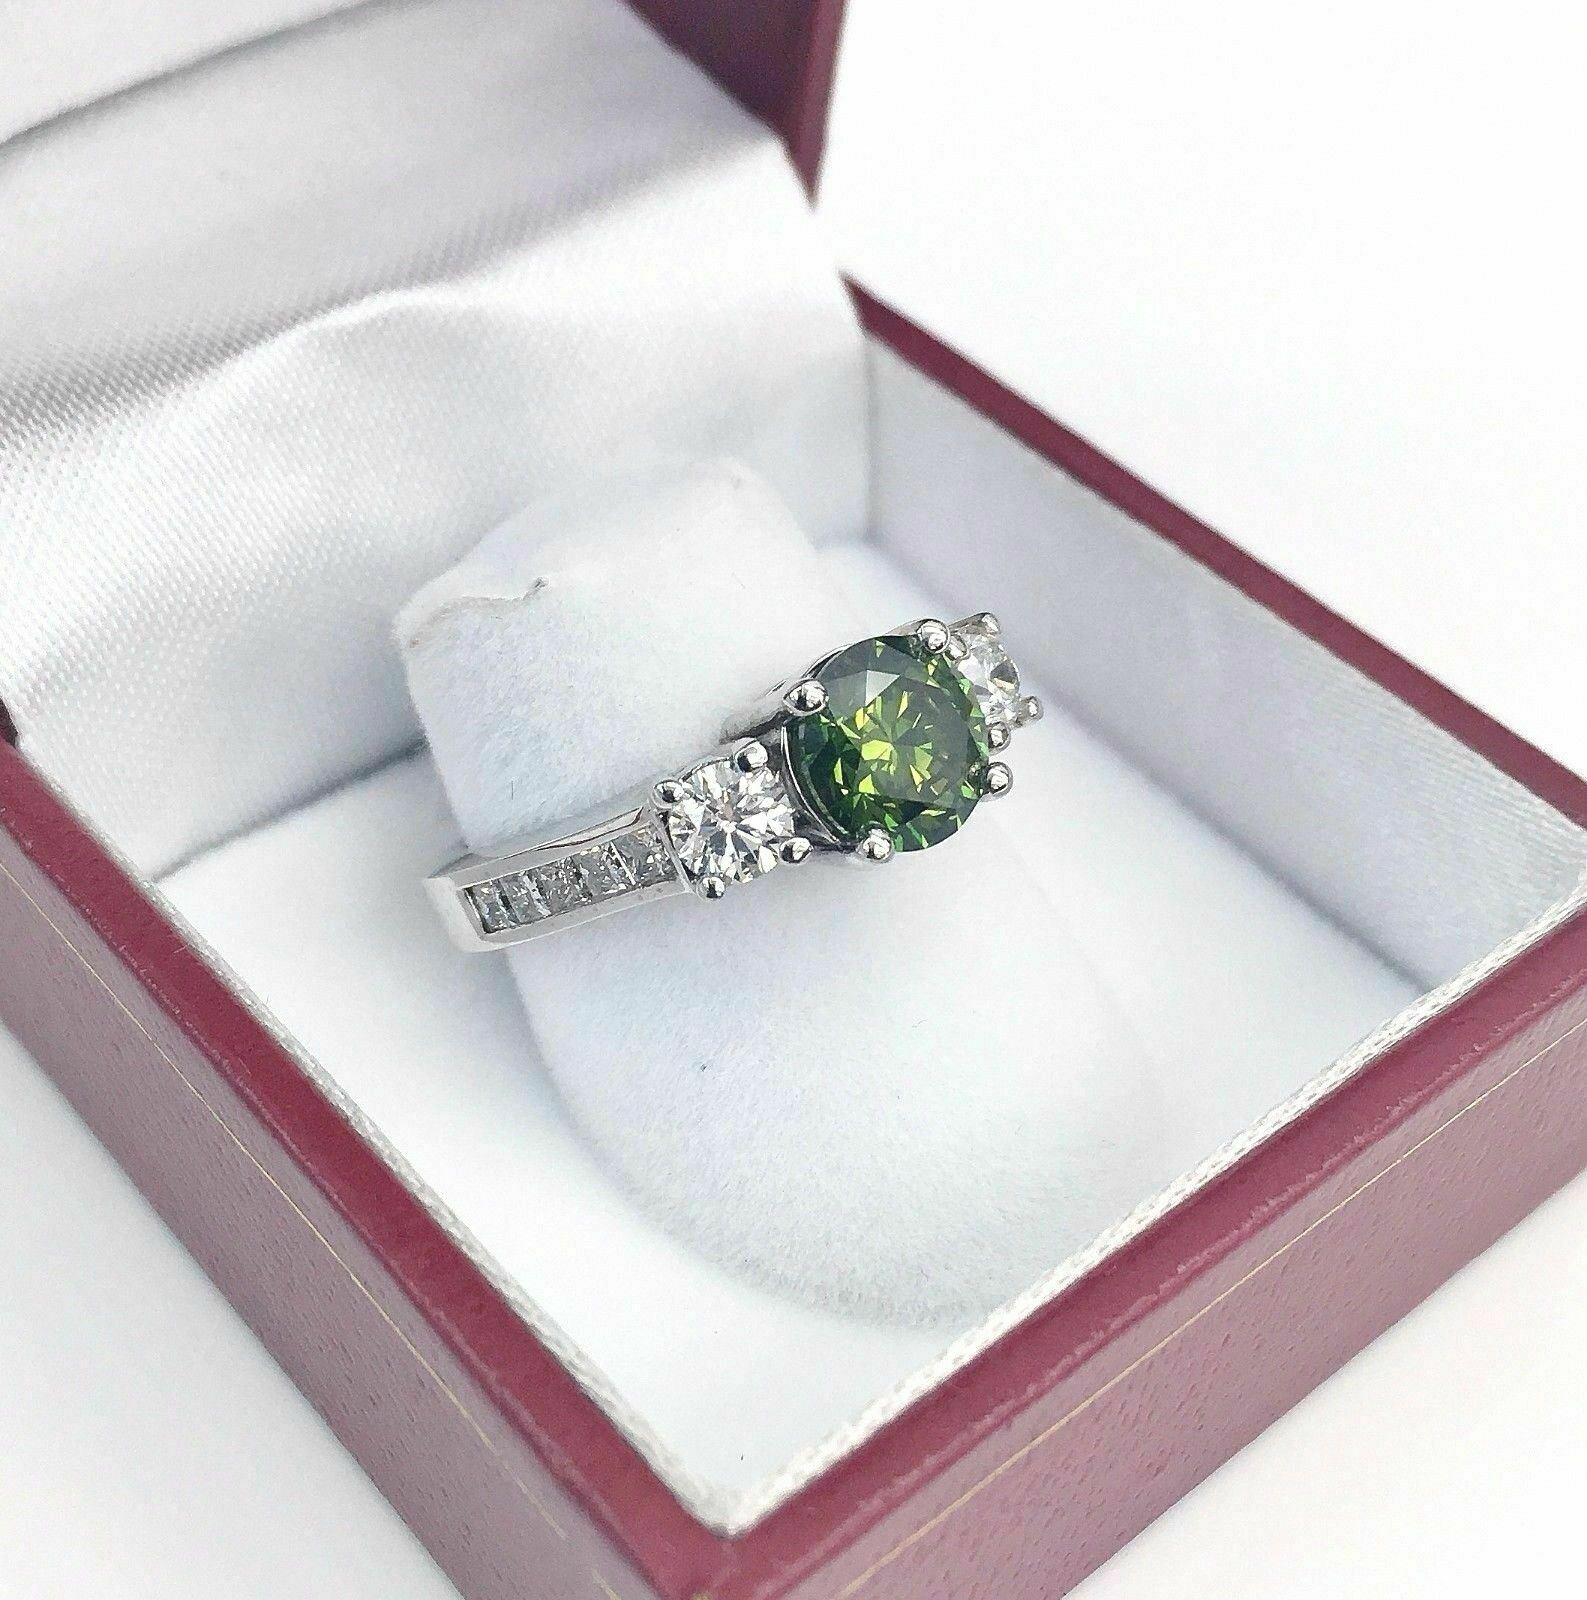 2.42 Carats t.w. Diamond Anniversary/Engagement Ring 1.45 Center Diamond 14K